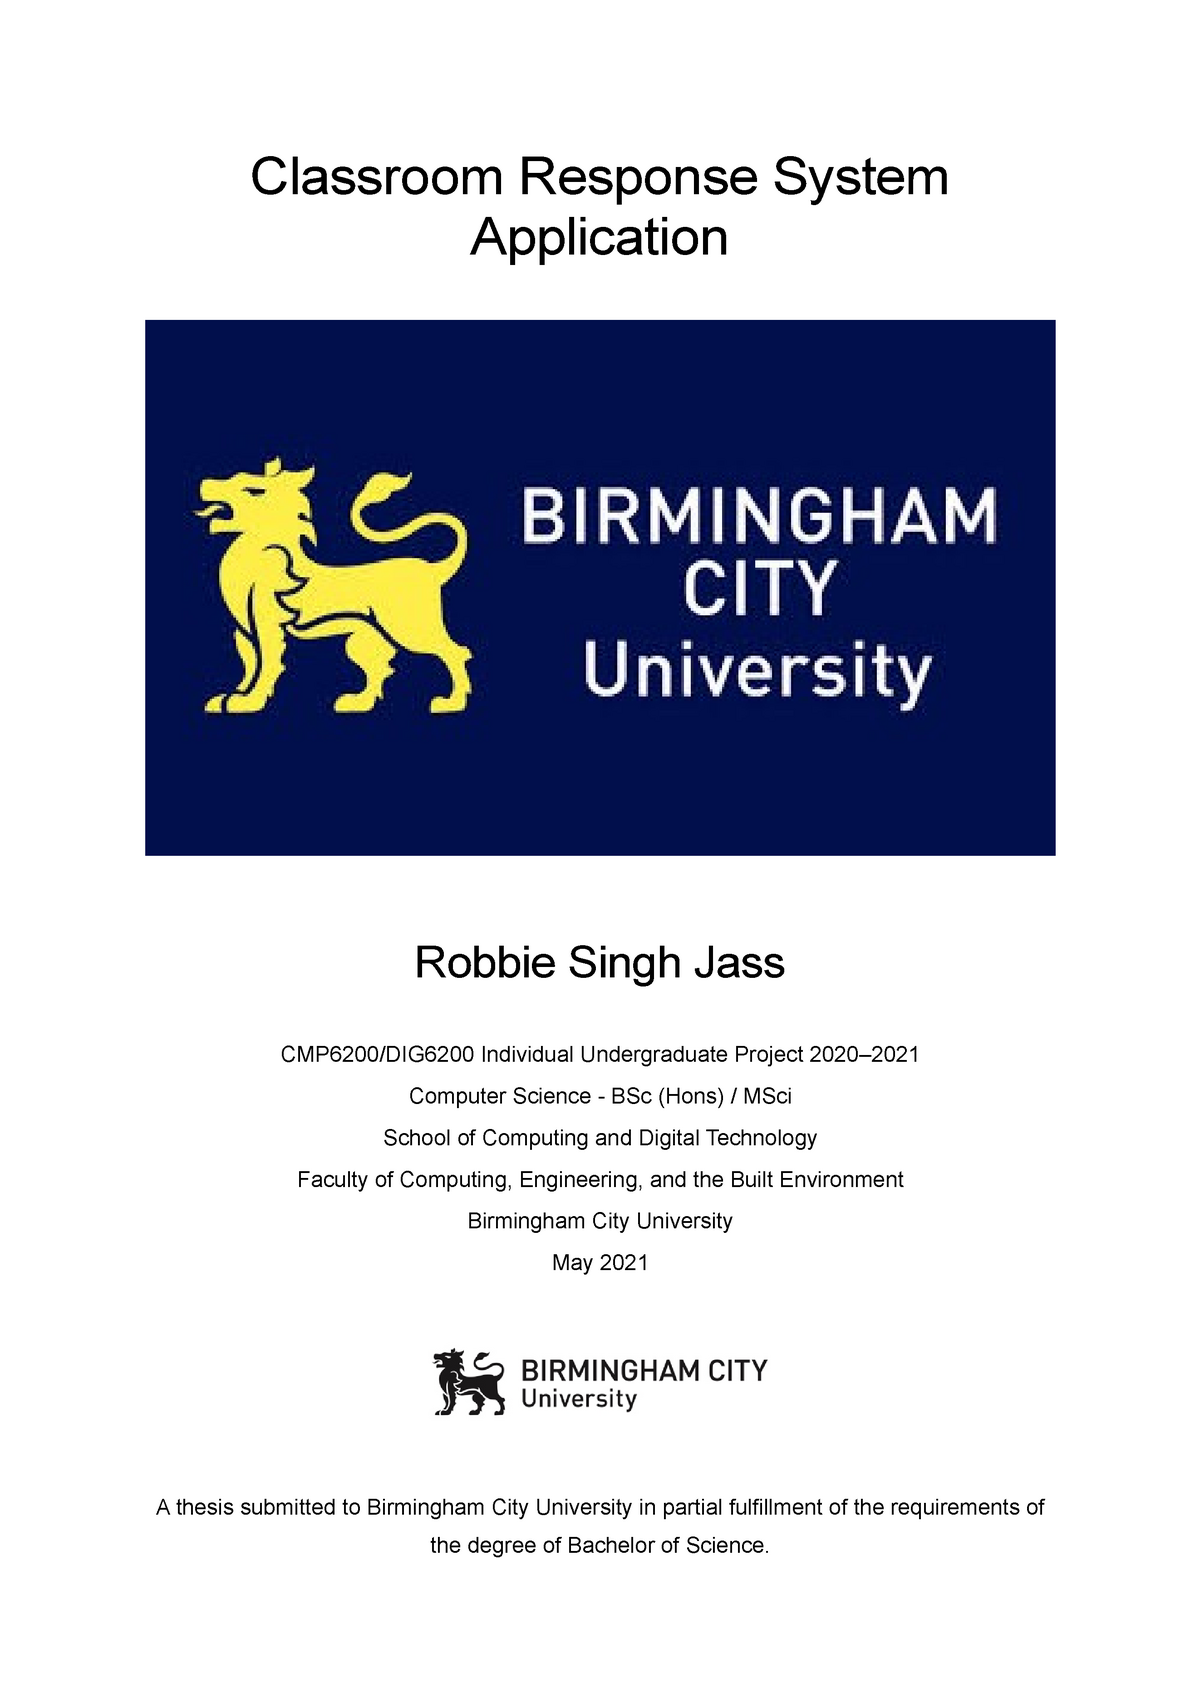 university of birmingham dissertation title page